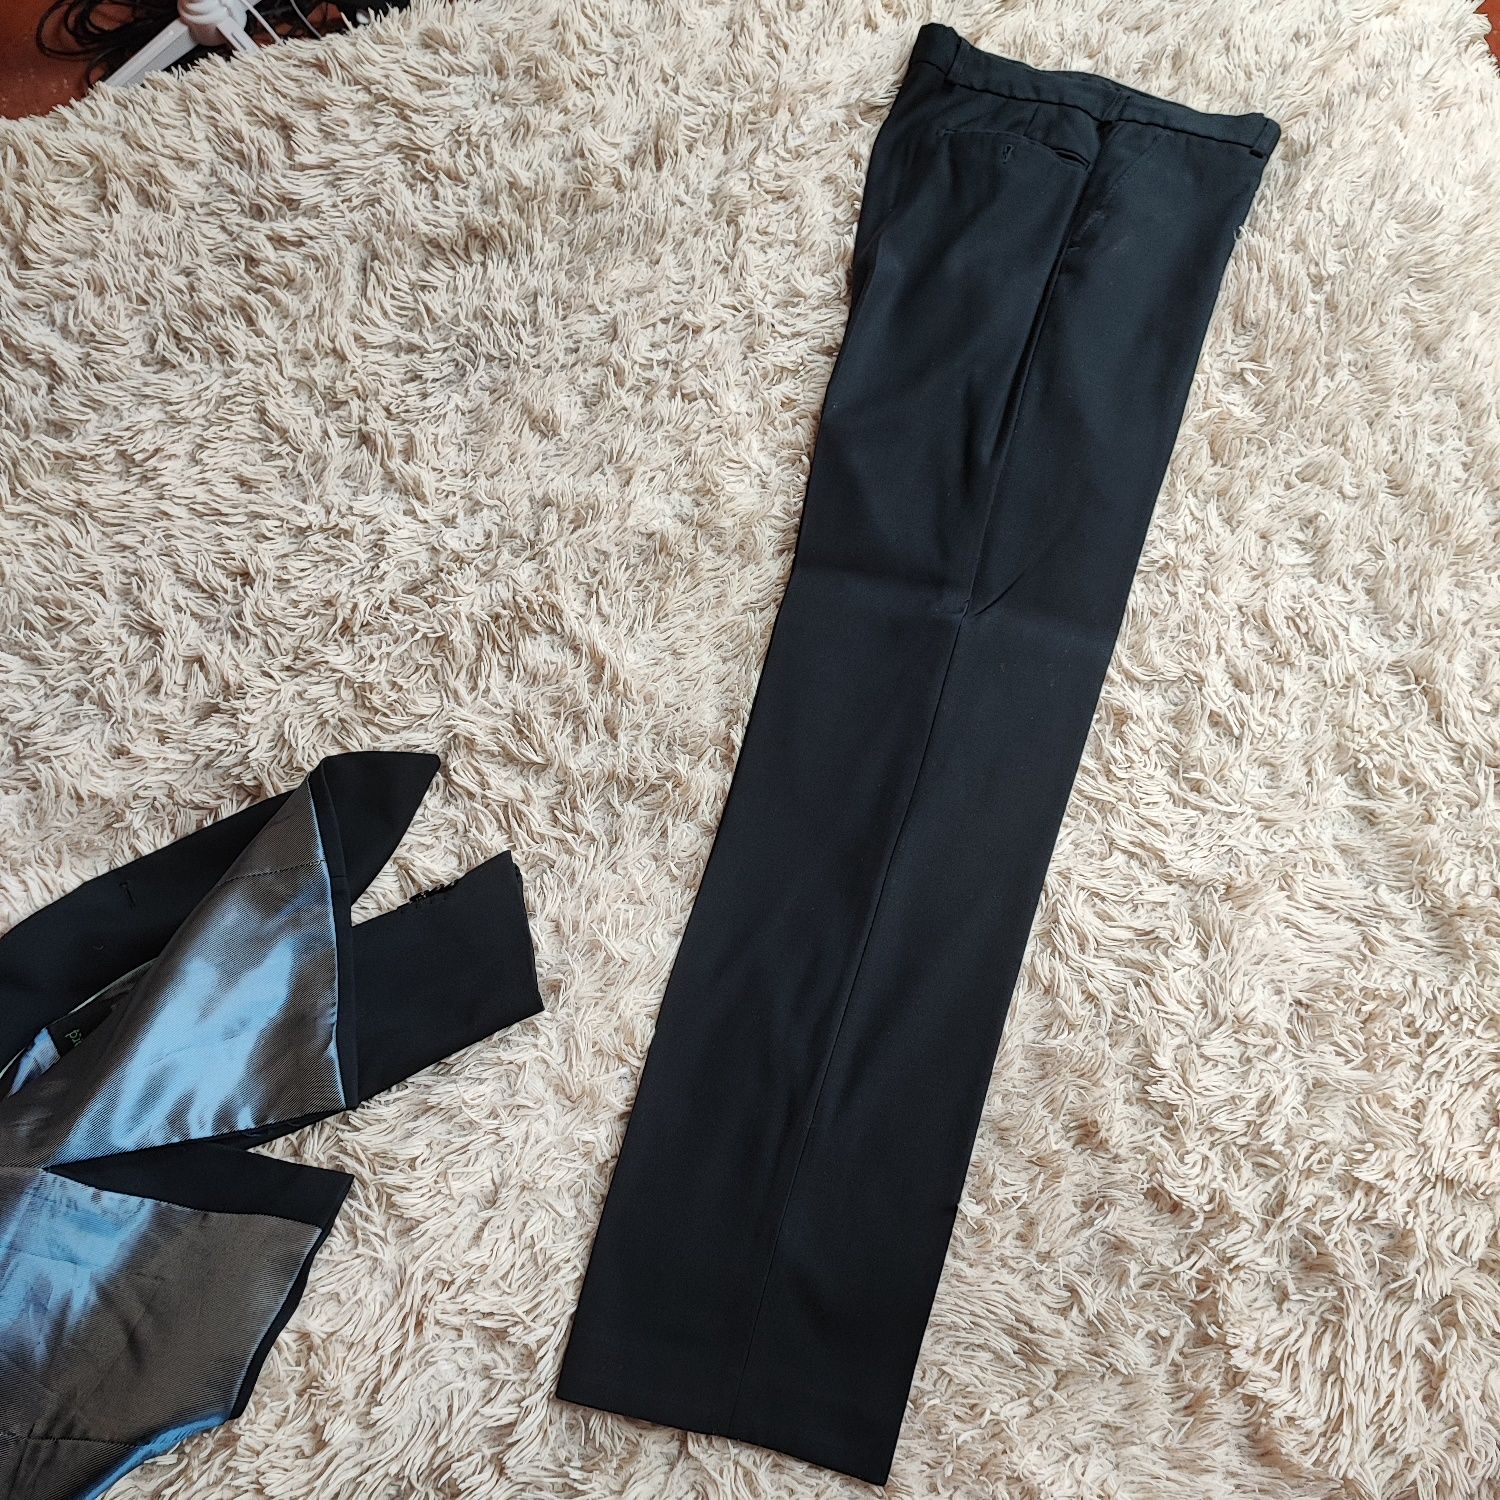 Czarny męski garnitur L XL marynarka spodnie krawat